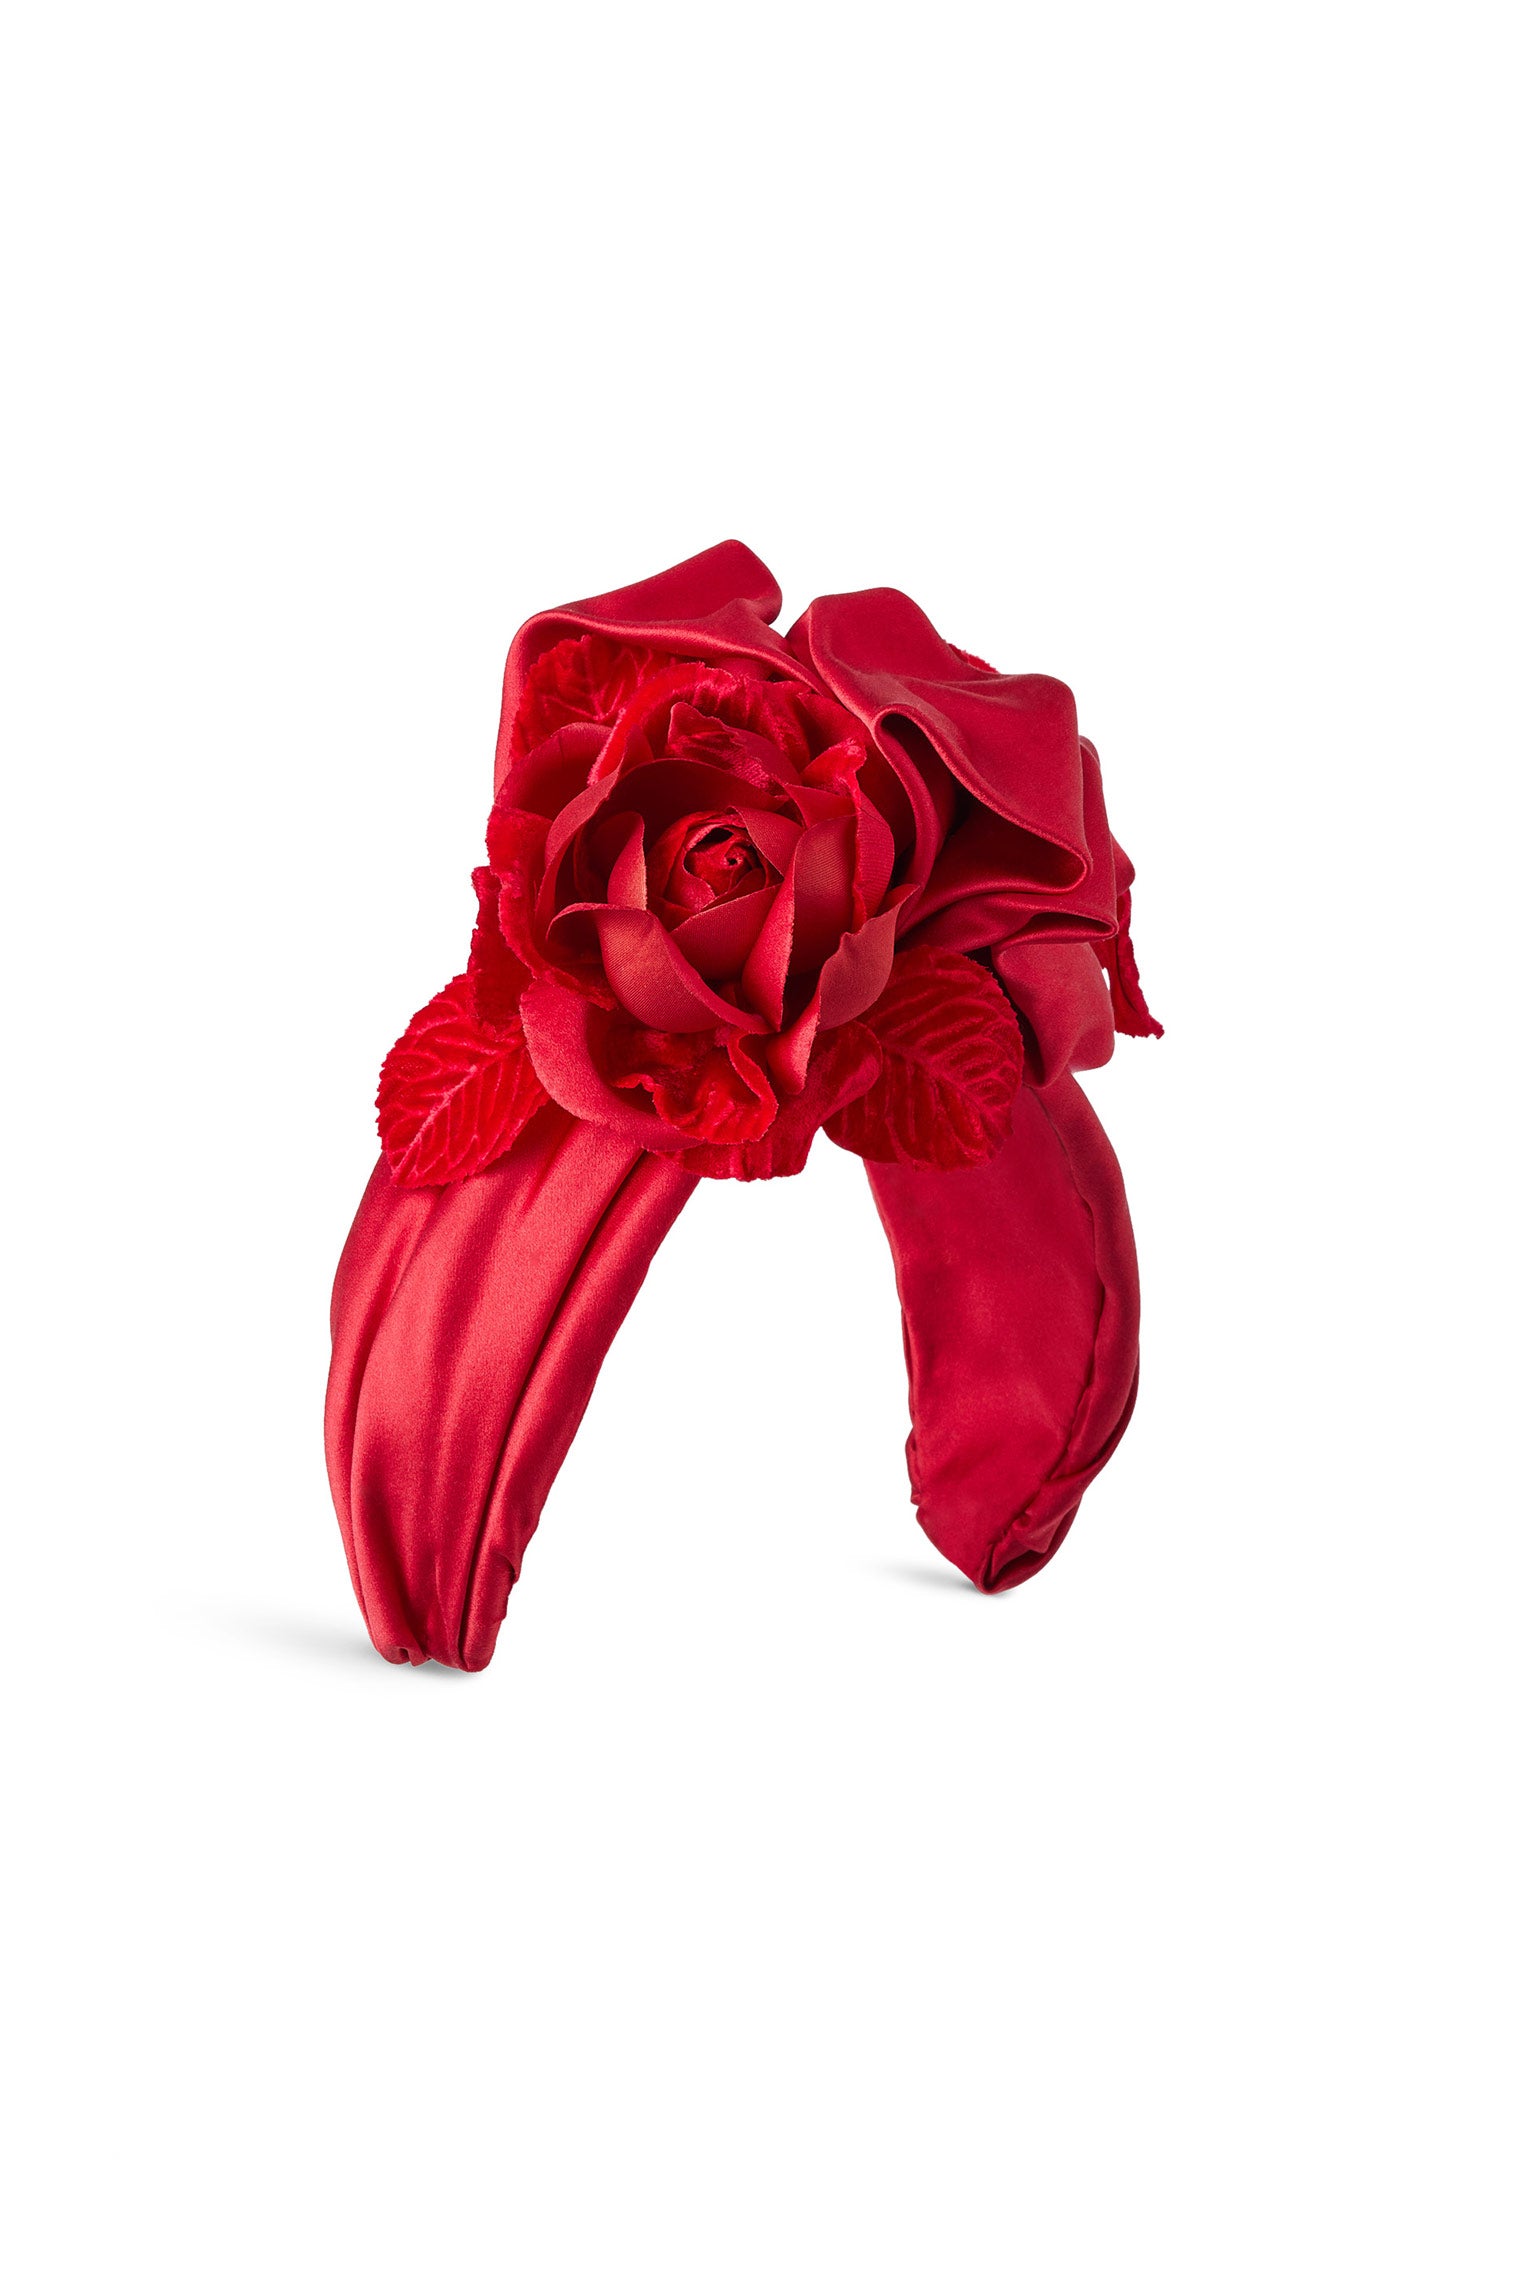 Dandridge Red Turban Headband - Lock Couture by Awon Golding - Lock & Co. Hatters London UK